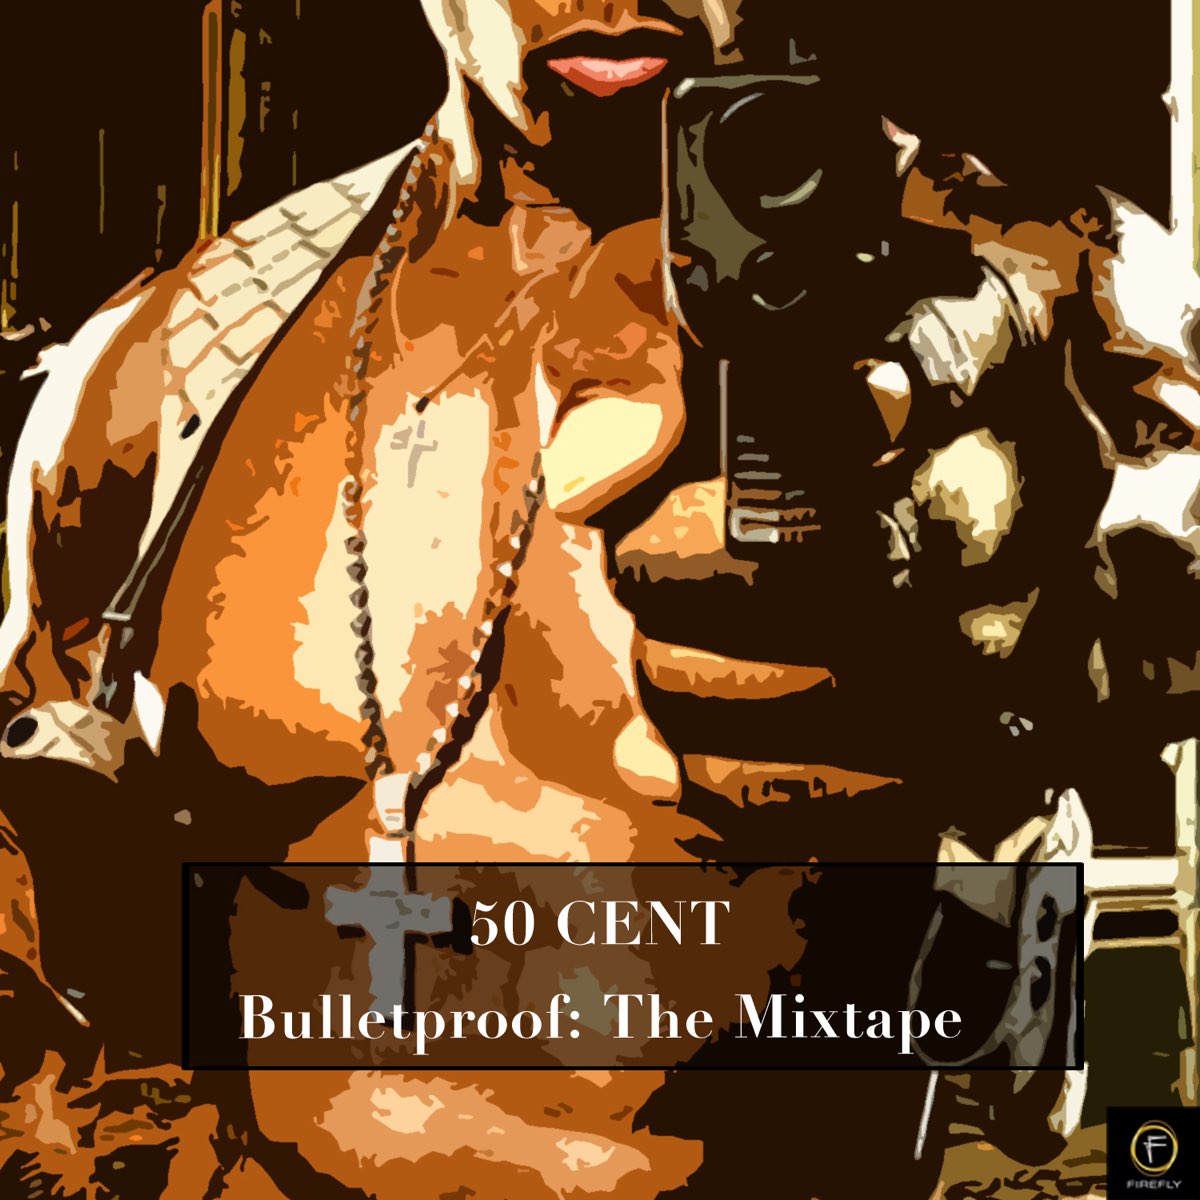 ‎50 Cent, Bulletproof: The Mixtape - Album by 50 Cent - Apple Music